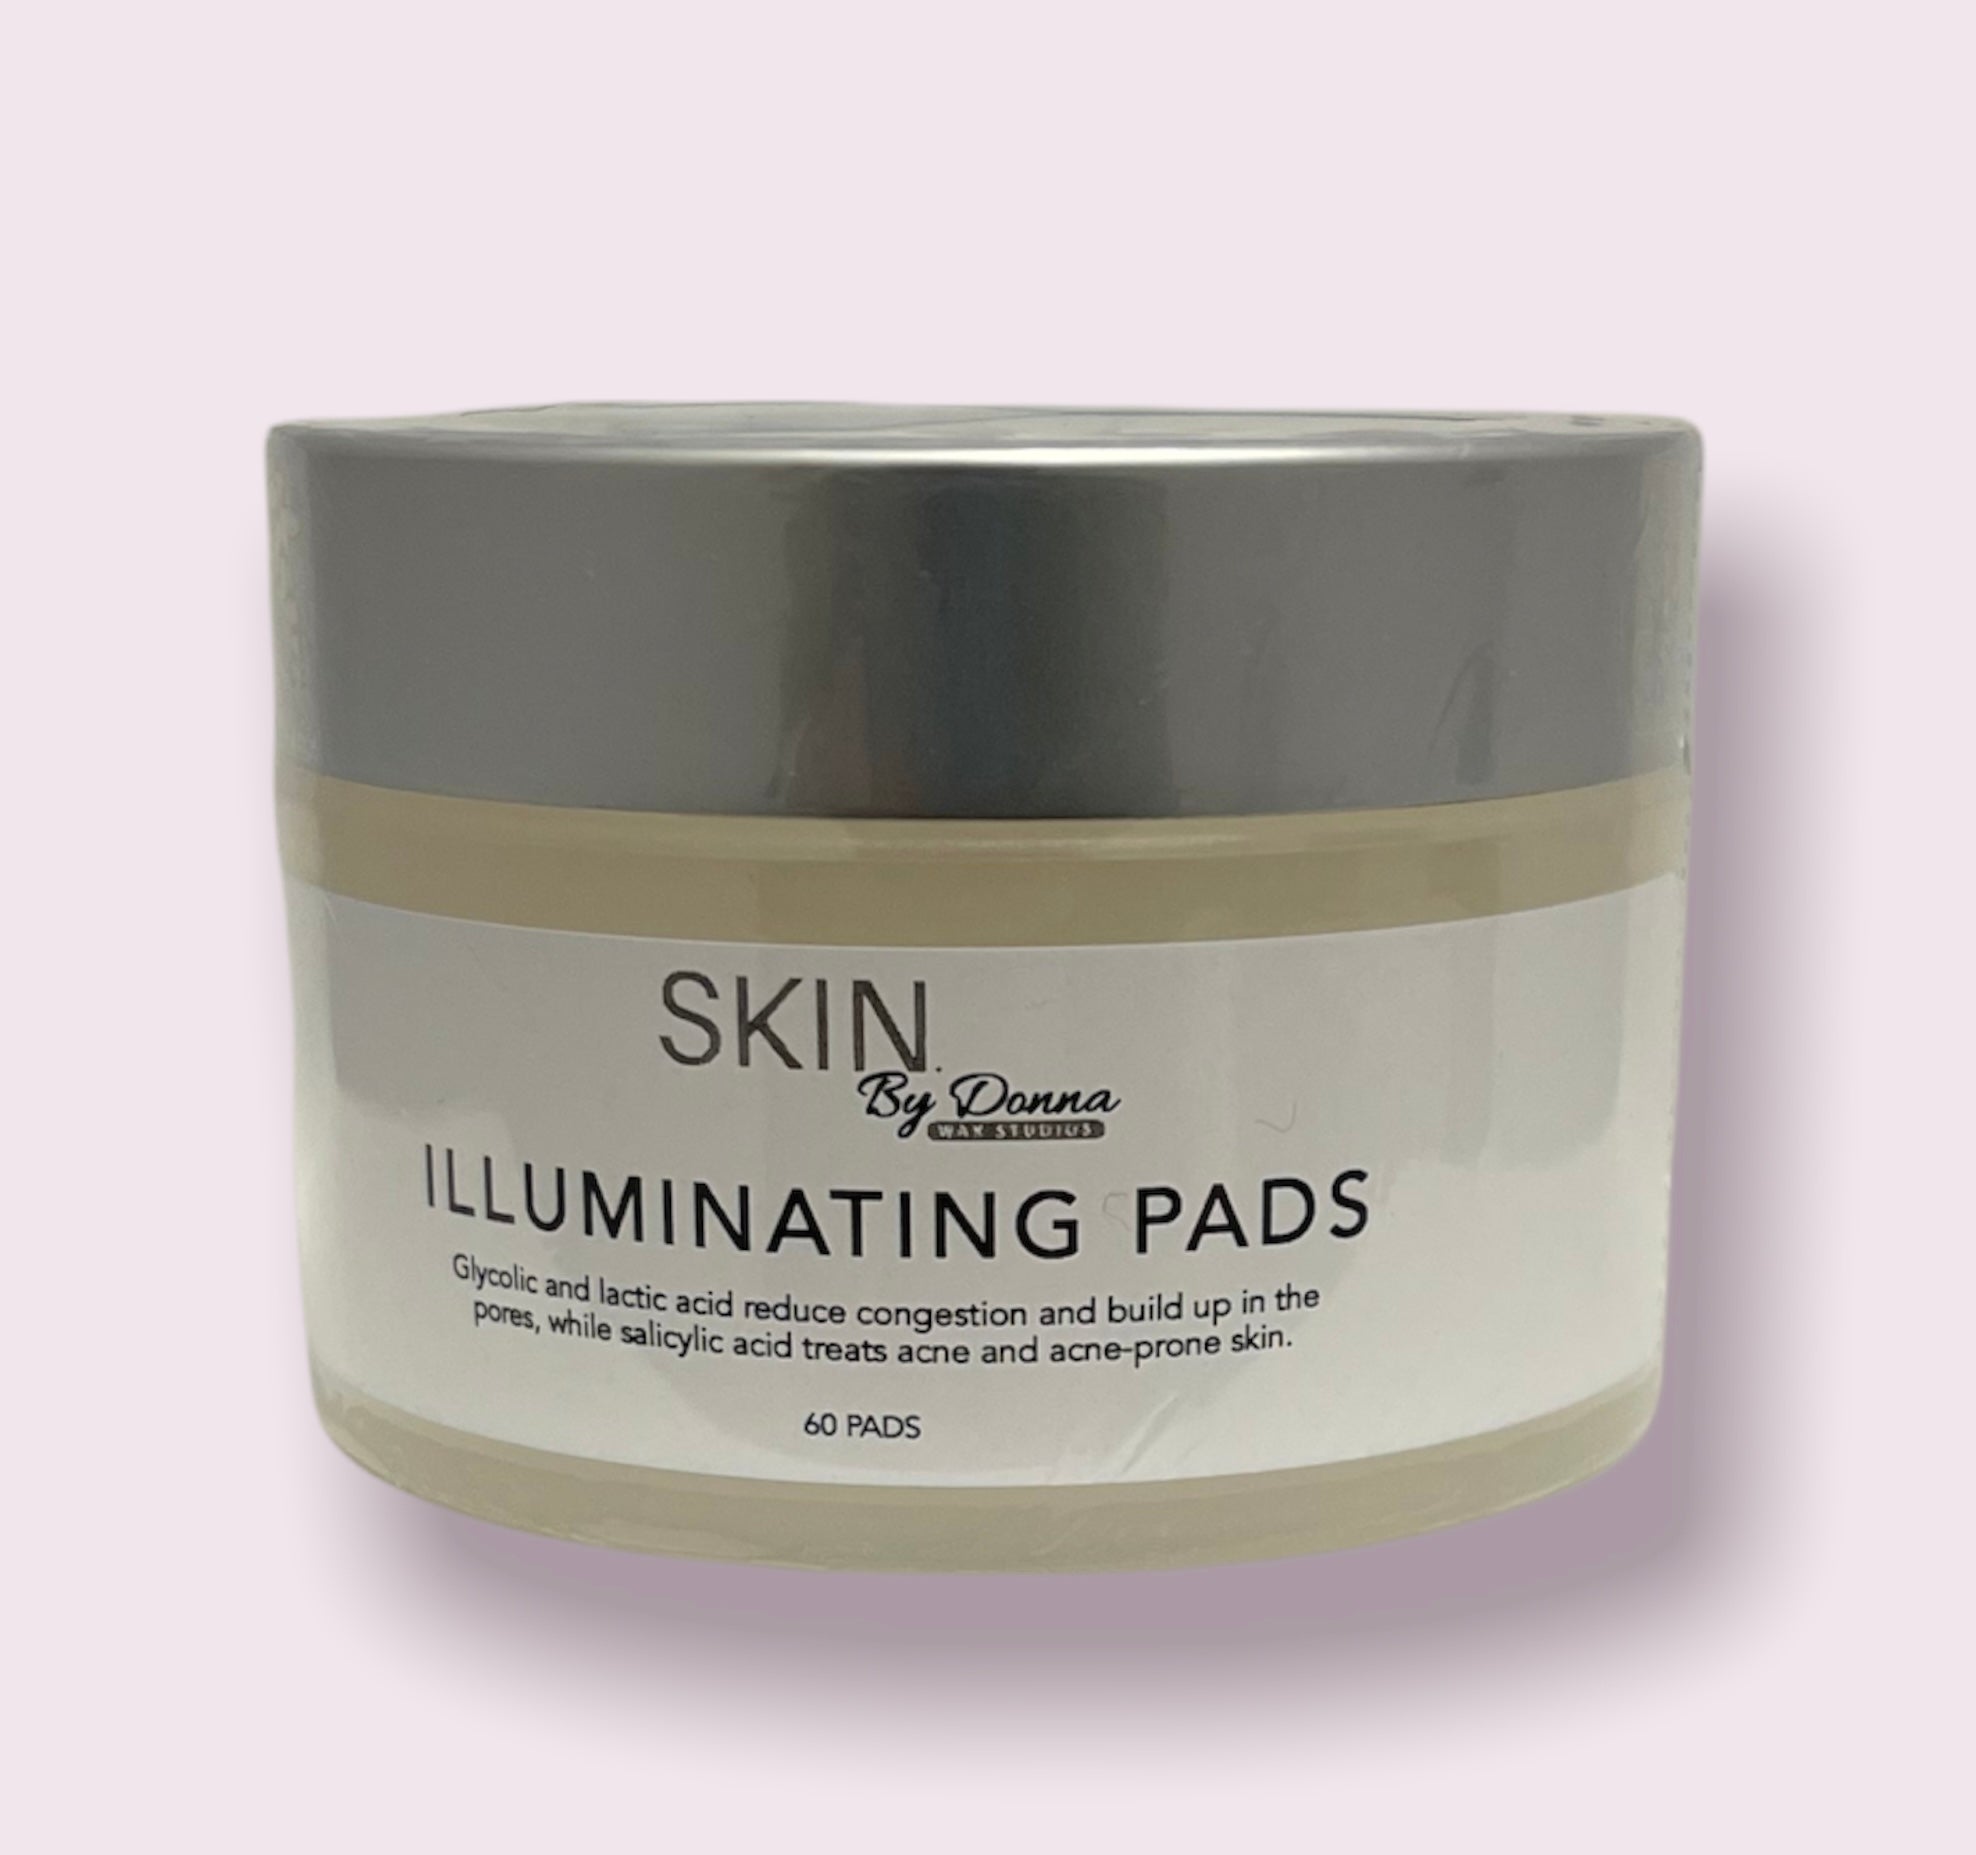 Skin by Donna Illuminating Pads